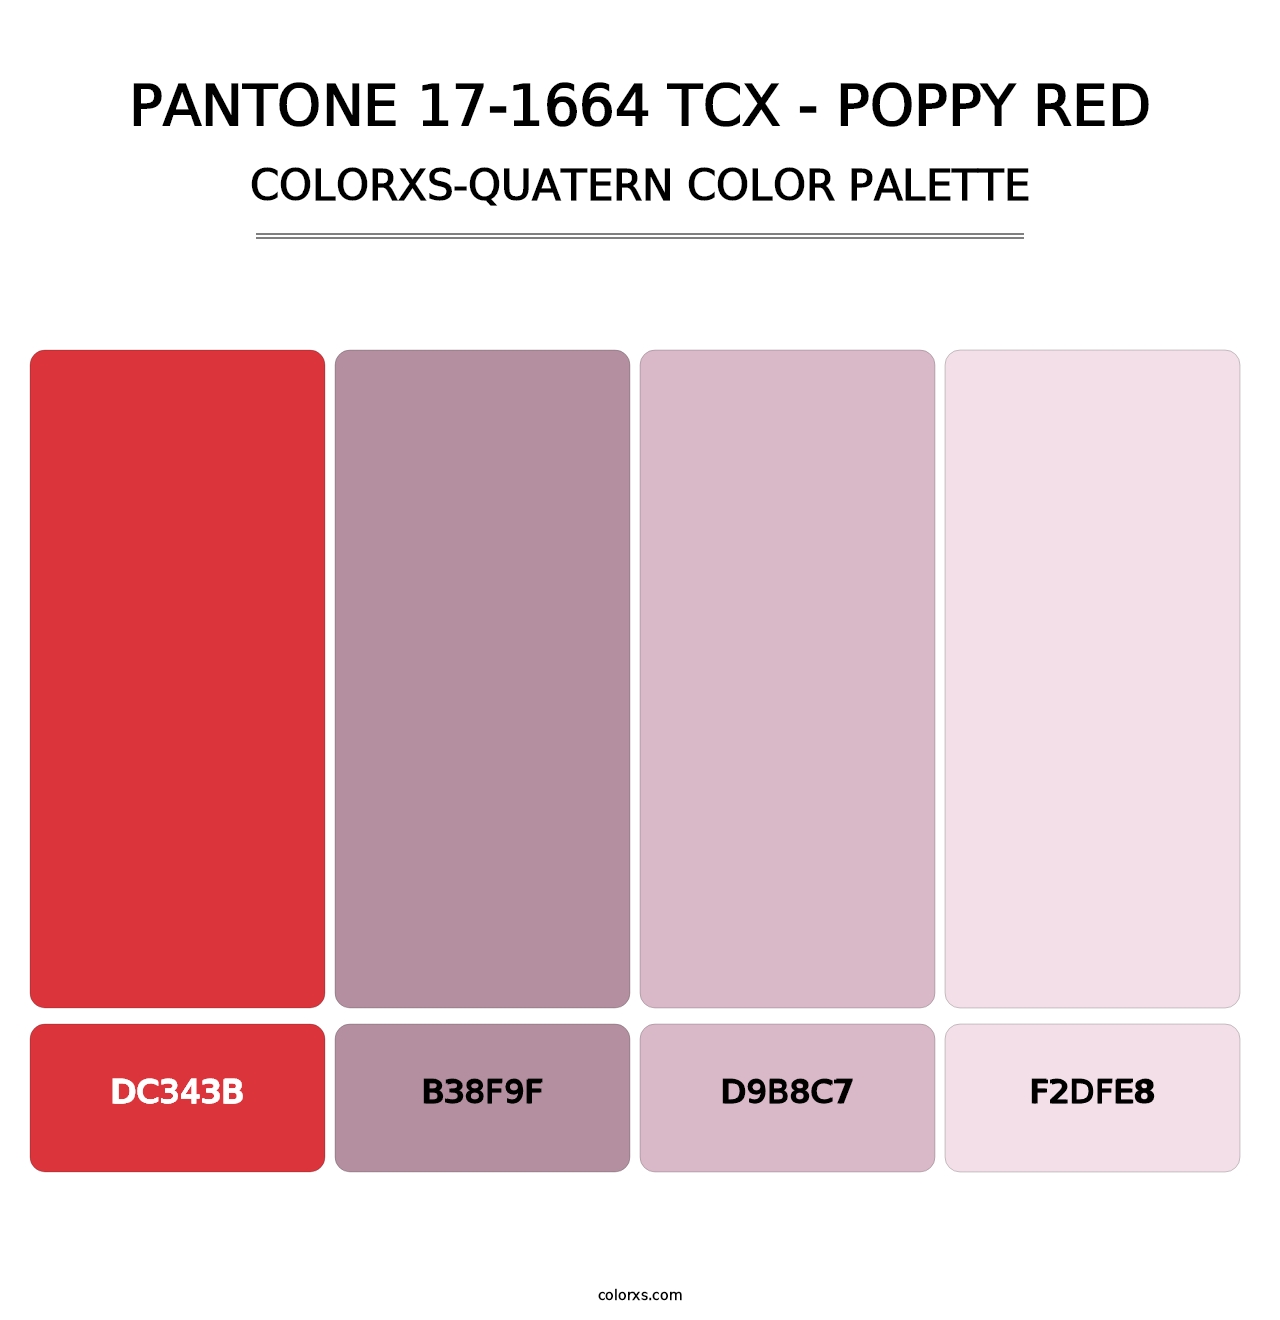 PANTONE 17-1664 TCX - Poppy Red - Colorxs Quatern Palette